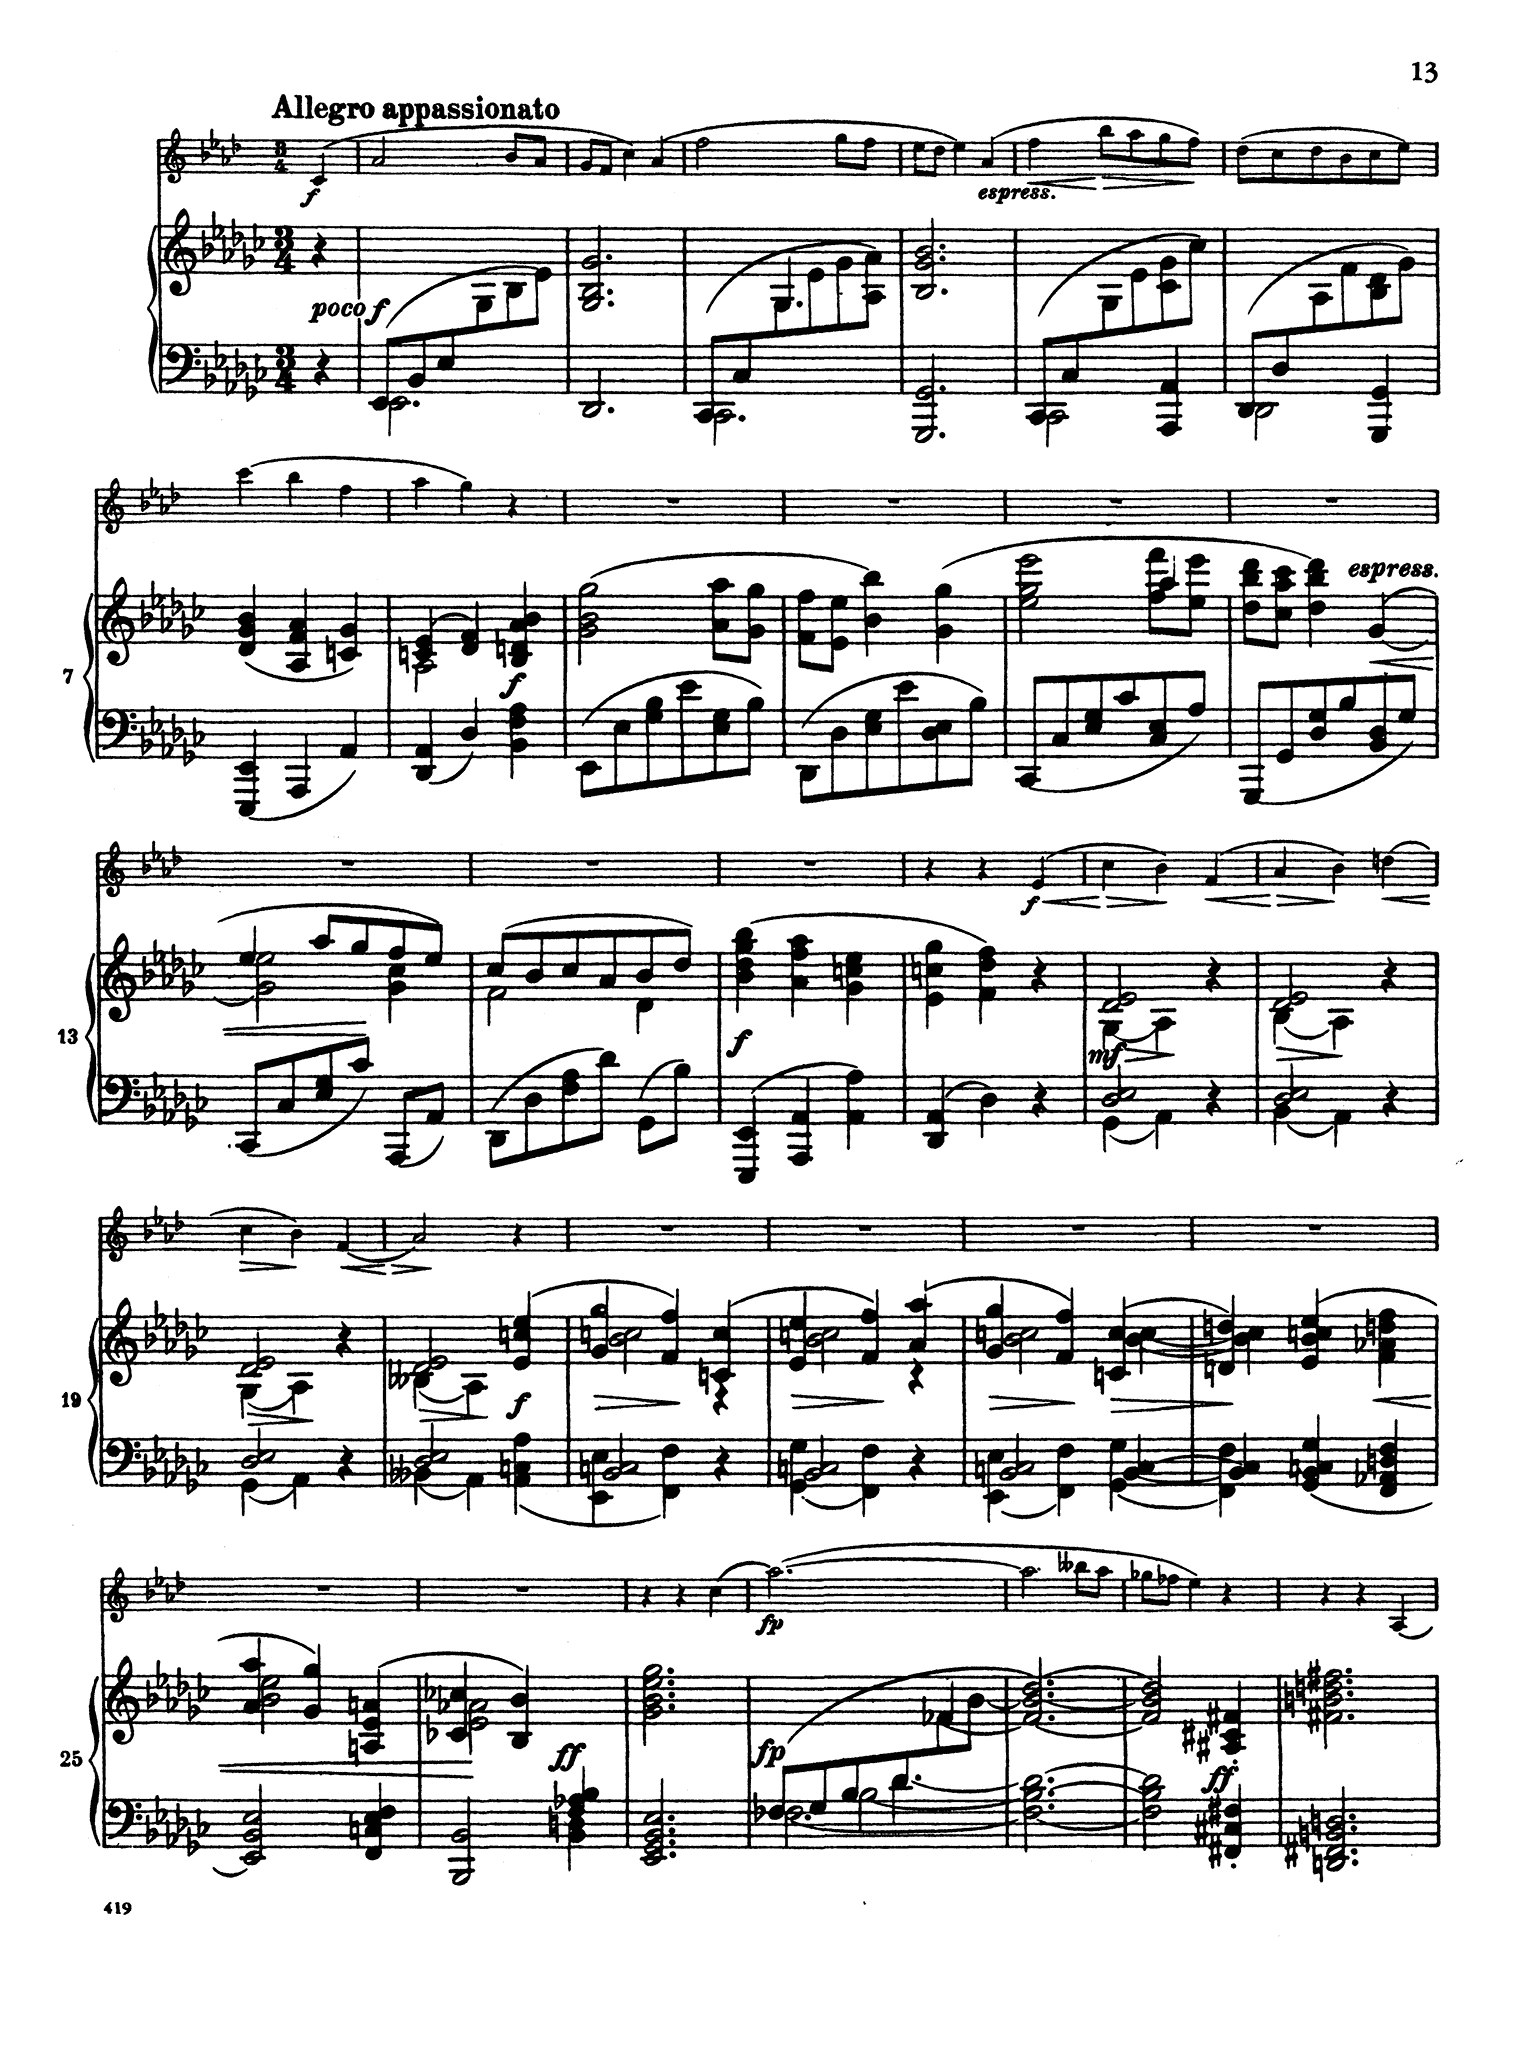 Brahms: Sonata No. 2 in Eb Major Op 120 for Clarinet & Piano